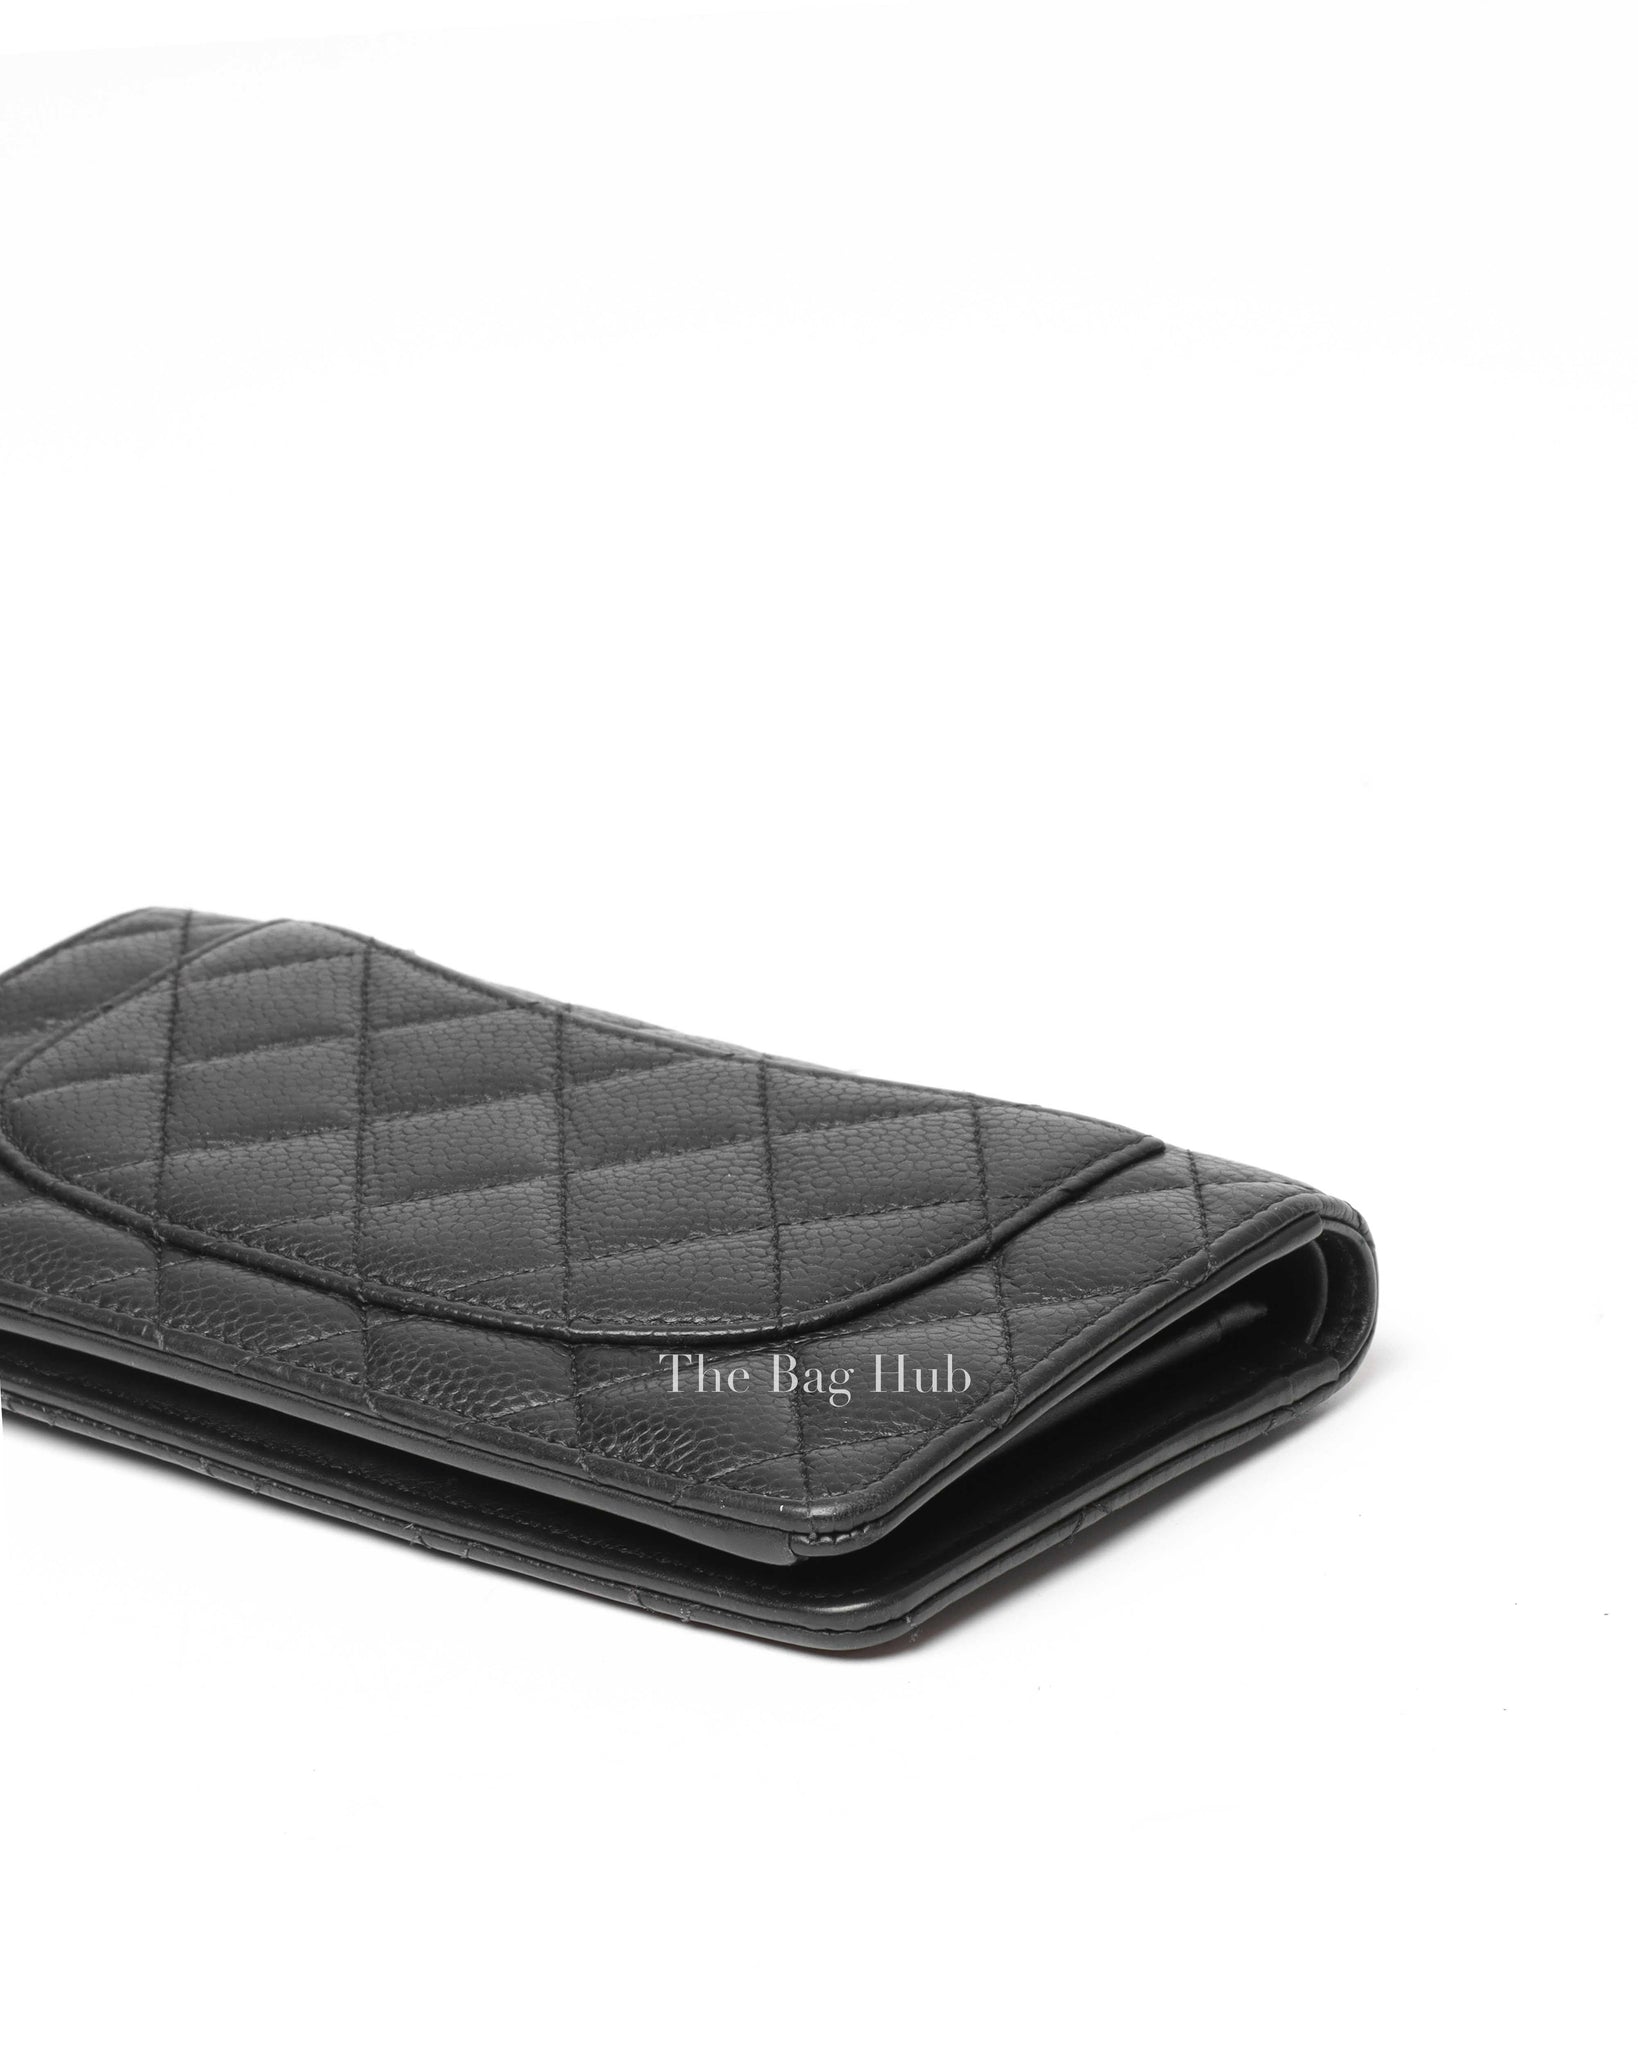 Chanel Black Caviar Bifold Long Wallet